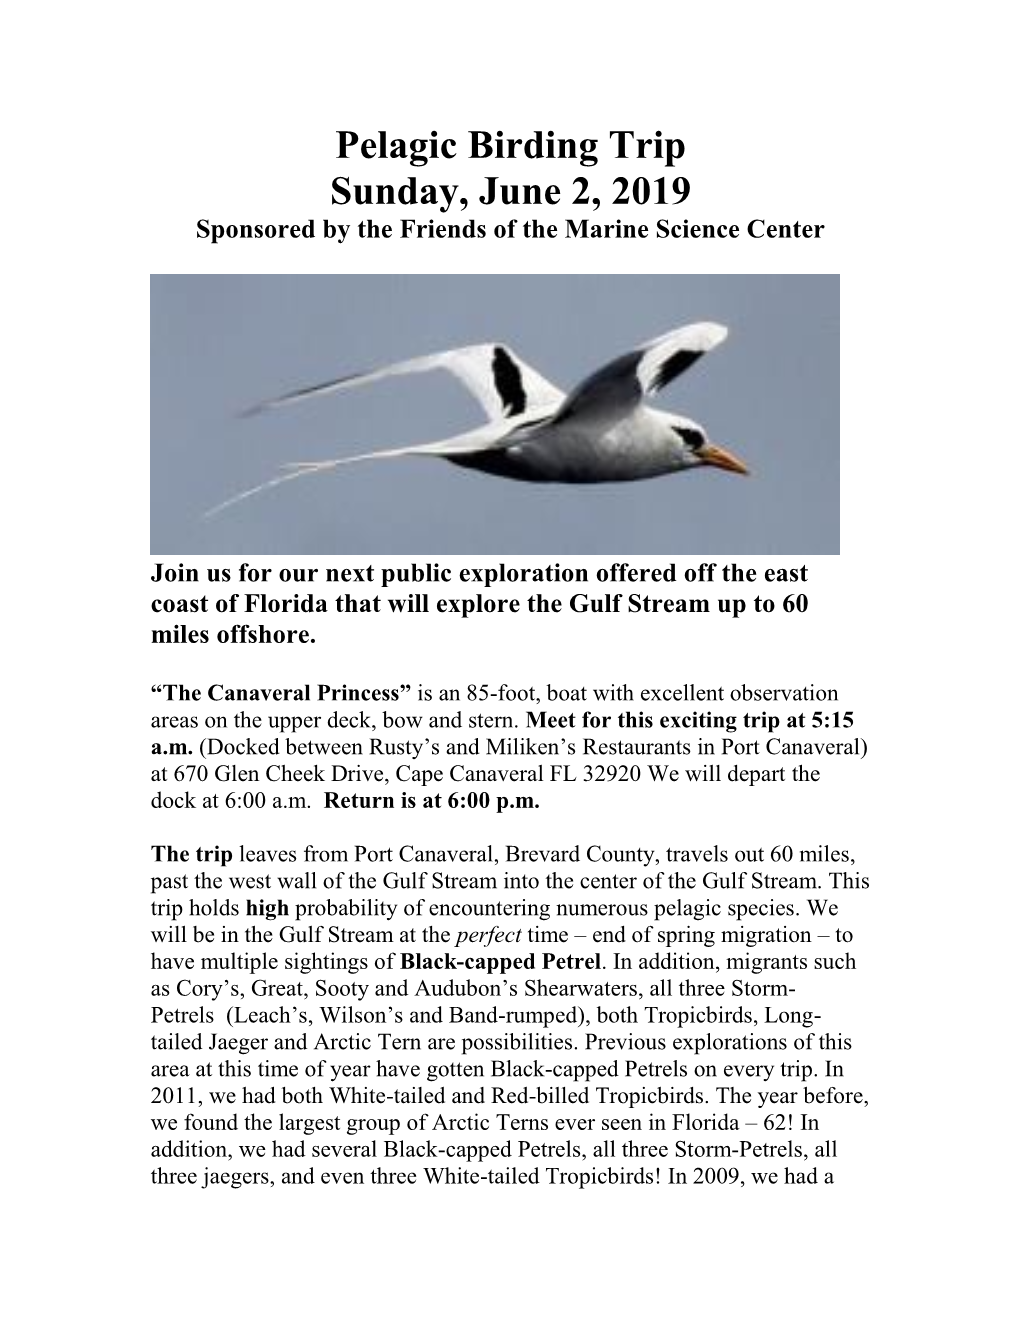 Pelagic Birding Trip Sunday, June 2, 2019 Sponsored by the Friends of the Marine Science Center